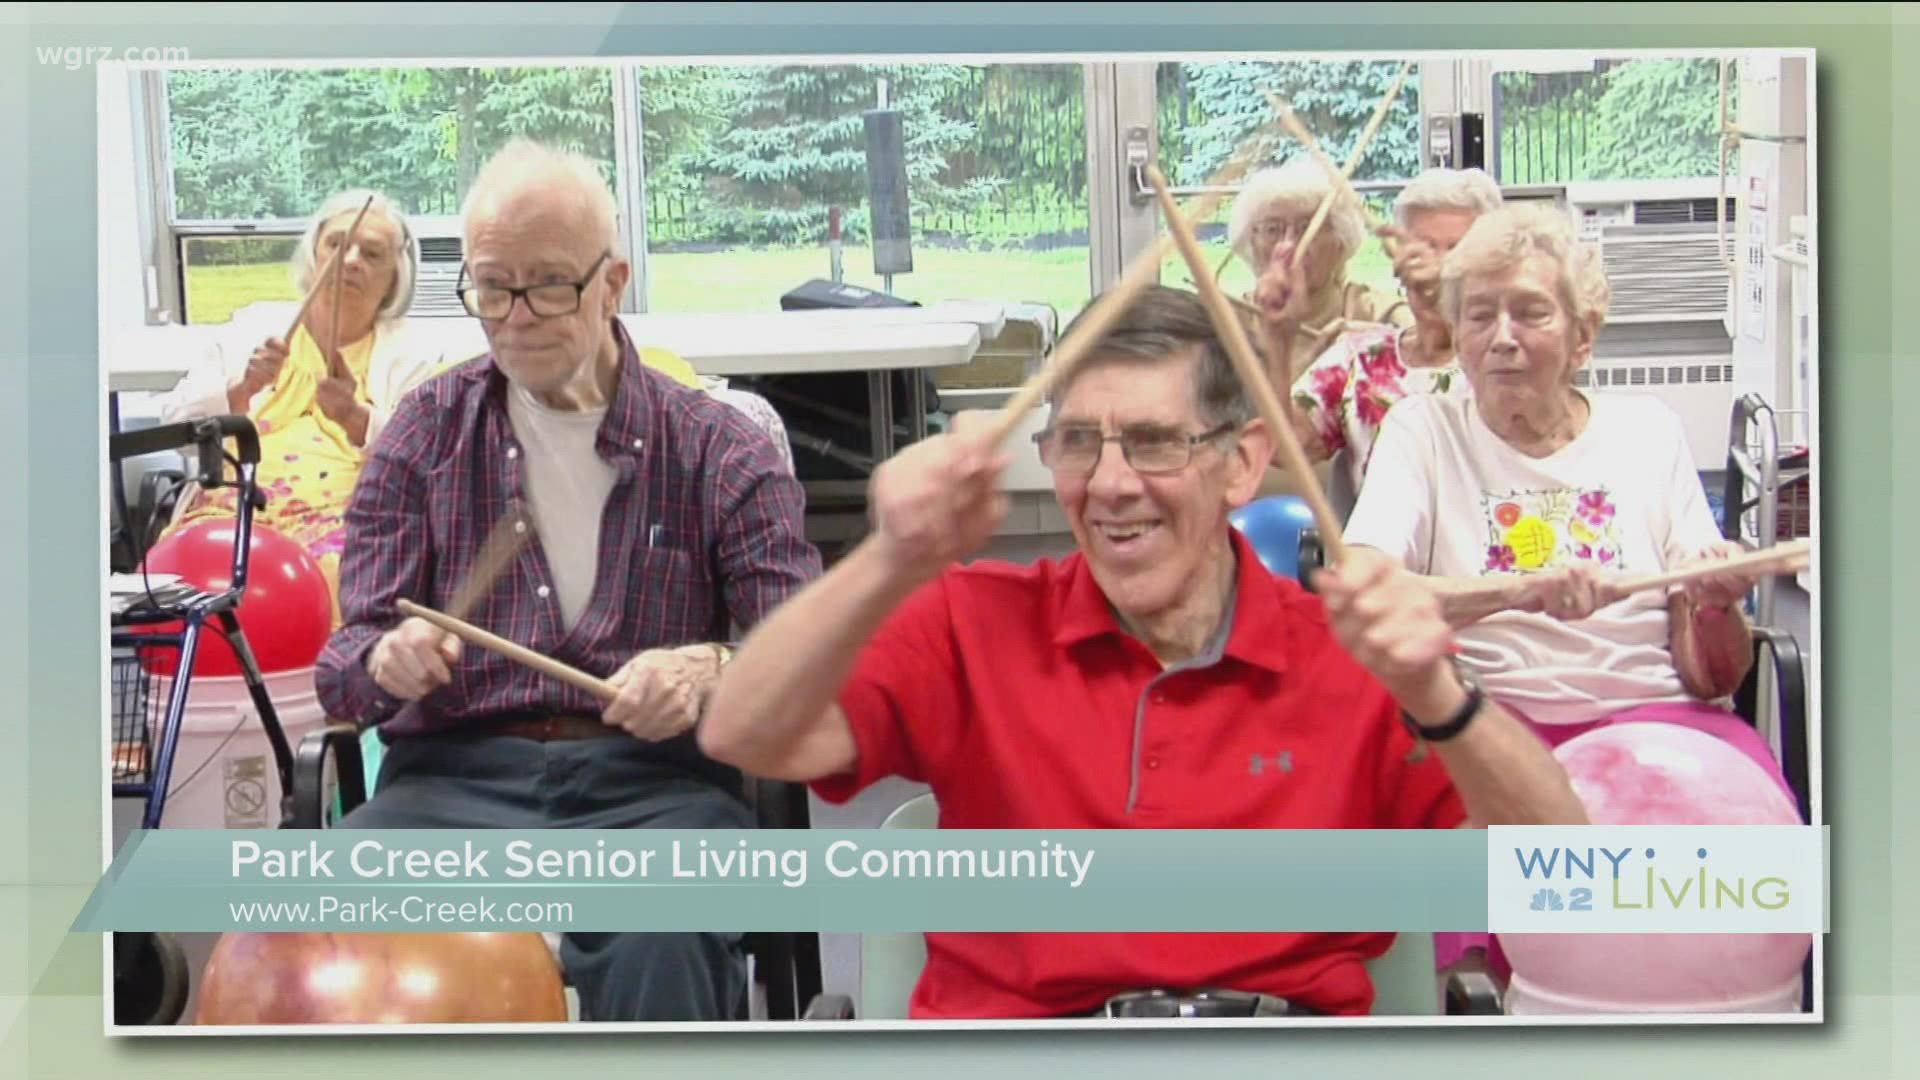 WNY Living - July 2 - Park Creek Senior Living Community (THIS VIDEO IS SPONSORED BY PARK CREEK SENIOR LIVING COMMUNITY)